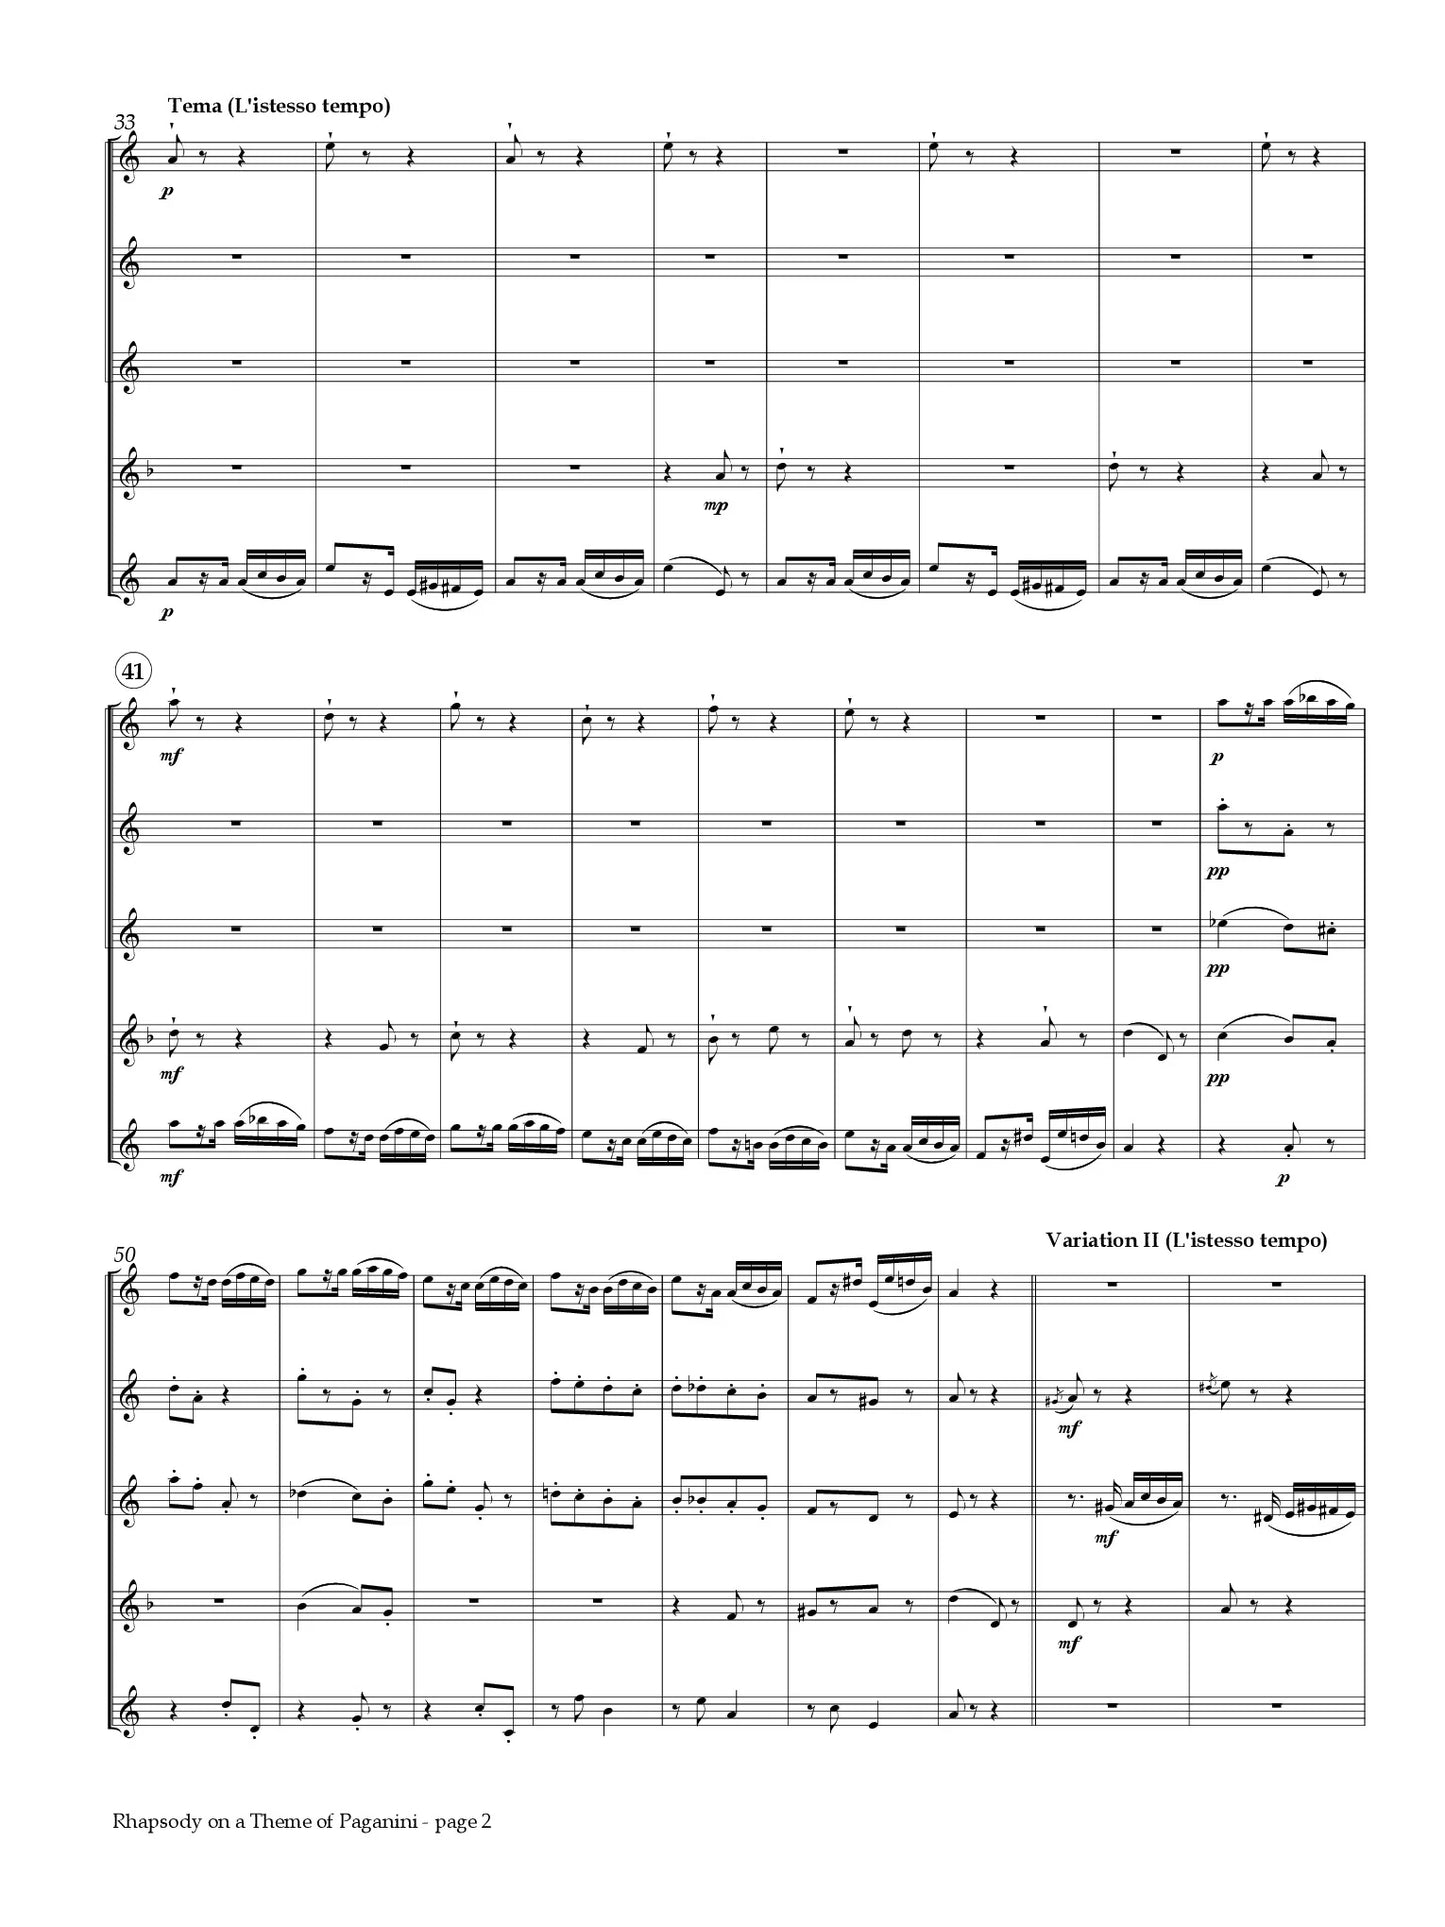 Rachmaninoff (arr. Hinze) - Rhapsody on a Theme of Paganini (Flute Choir)